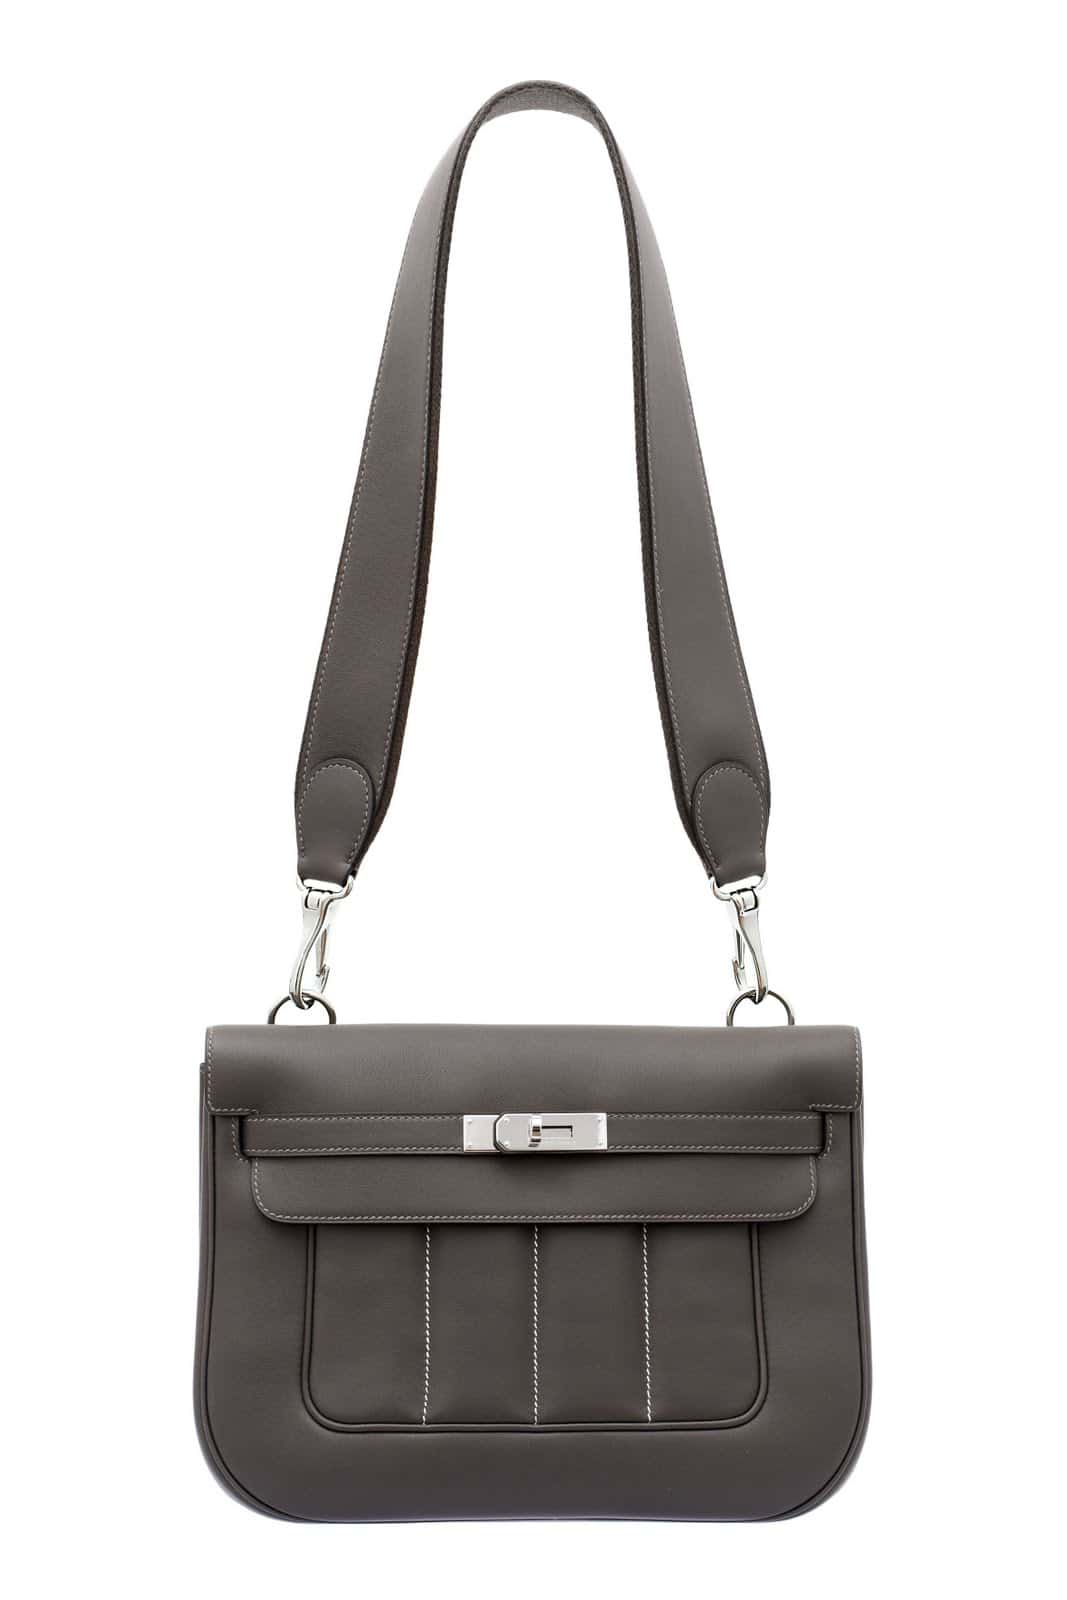 Hermes Mini Berline Bag